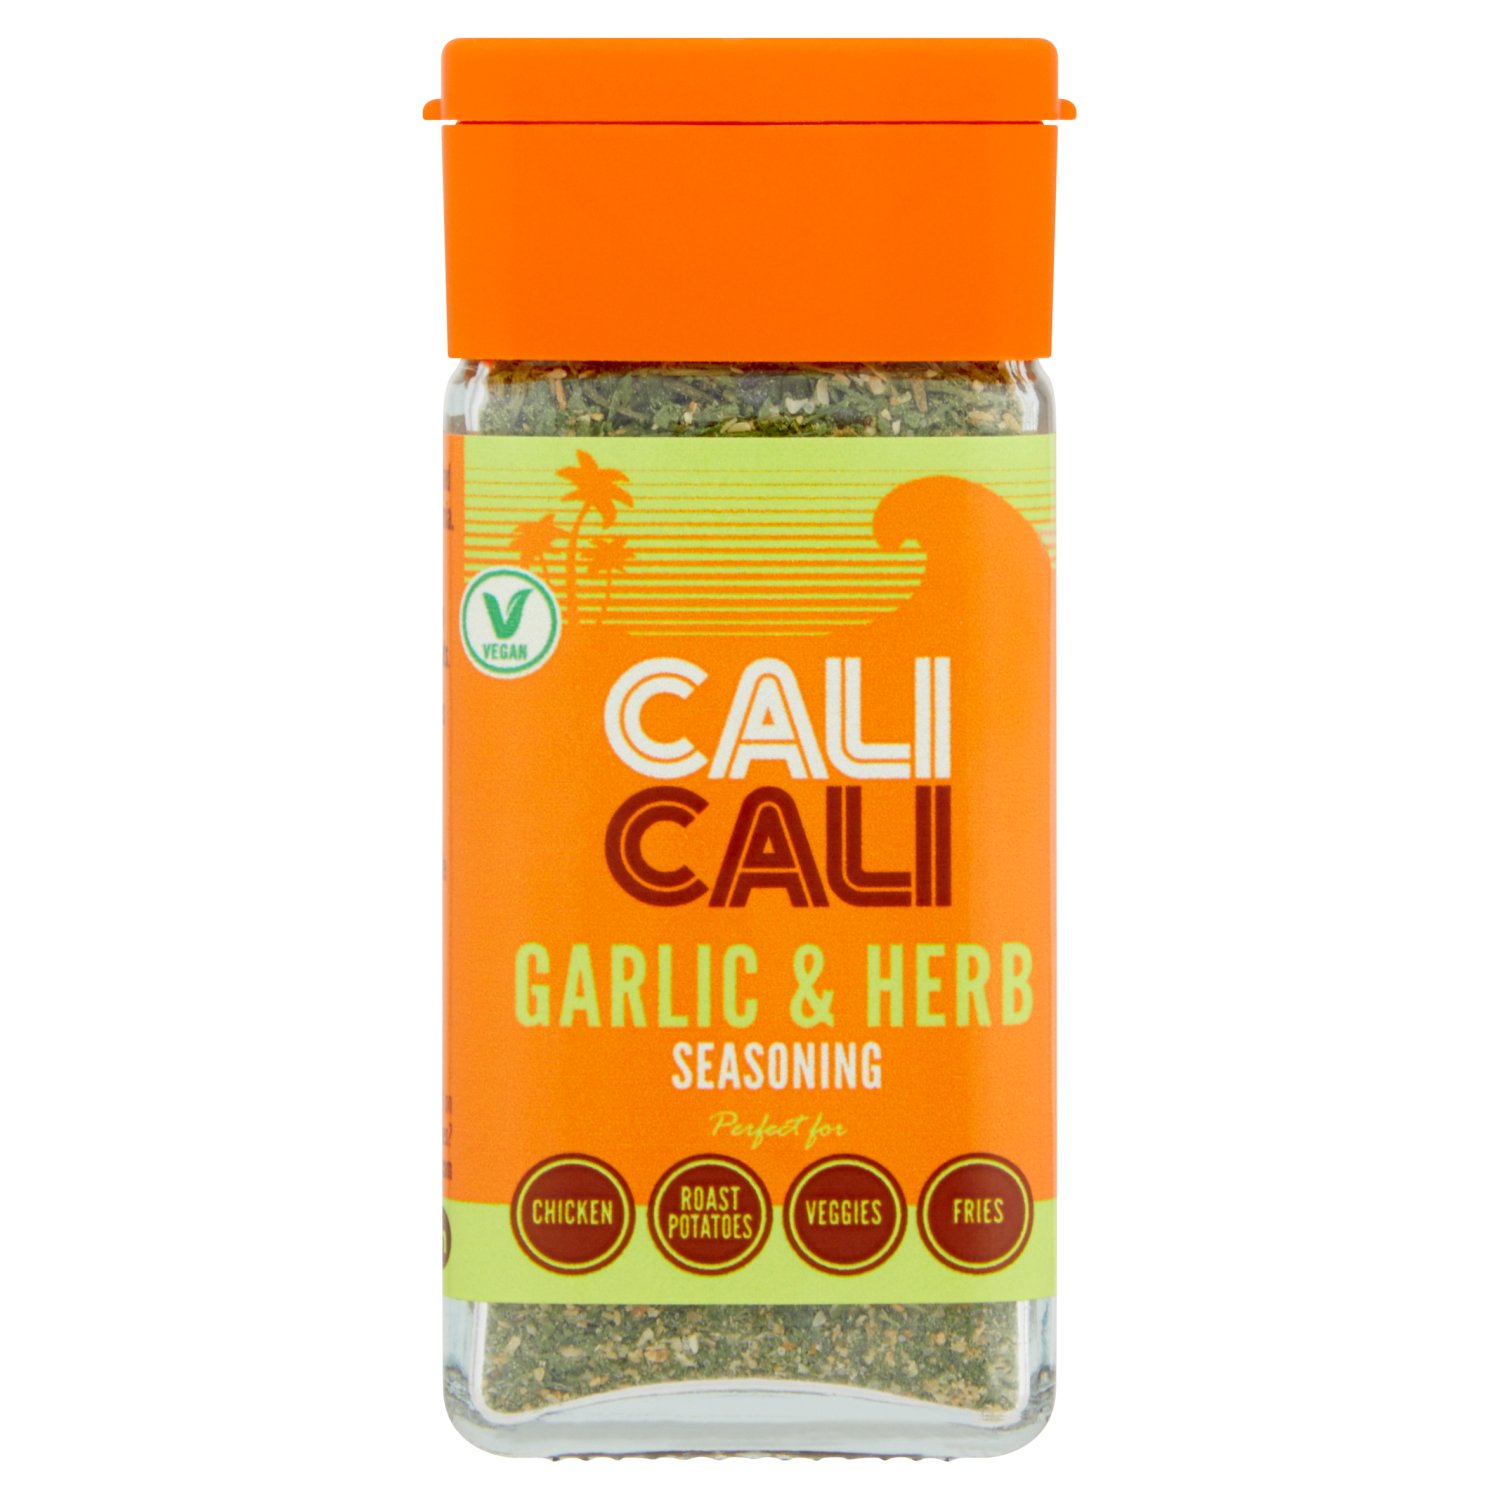 Cali Cali Garlic & Herb Seasoning (40 g)